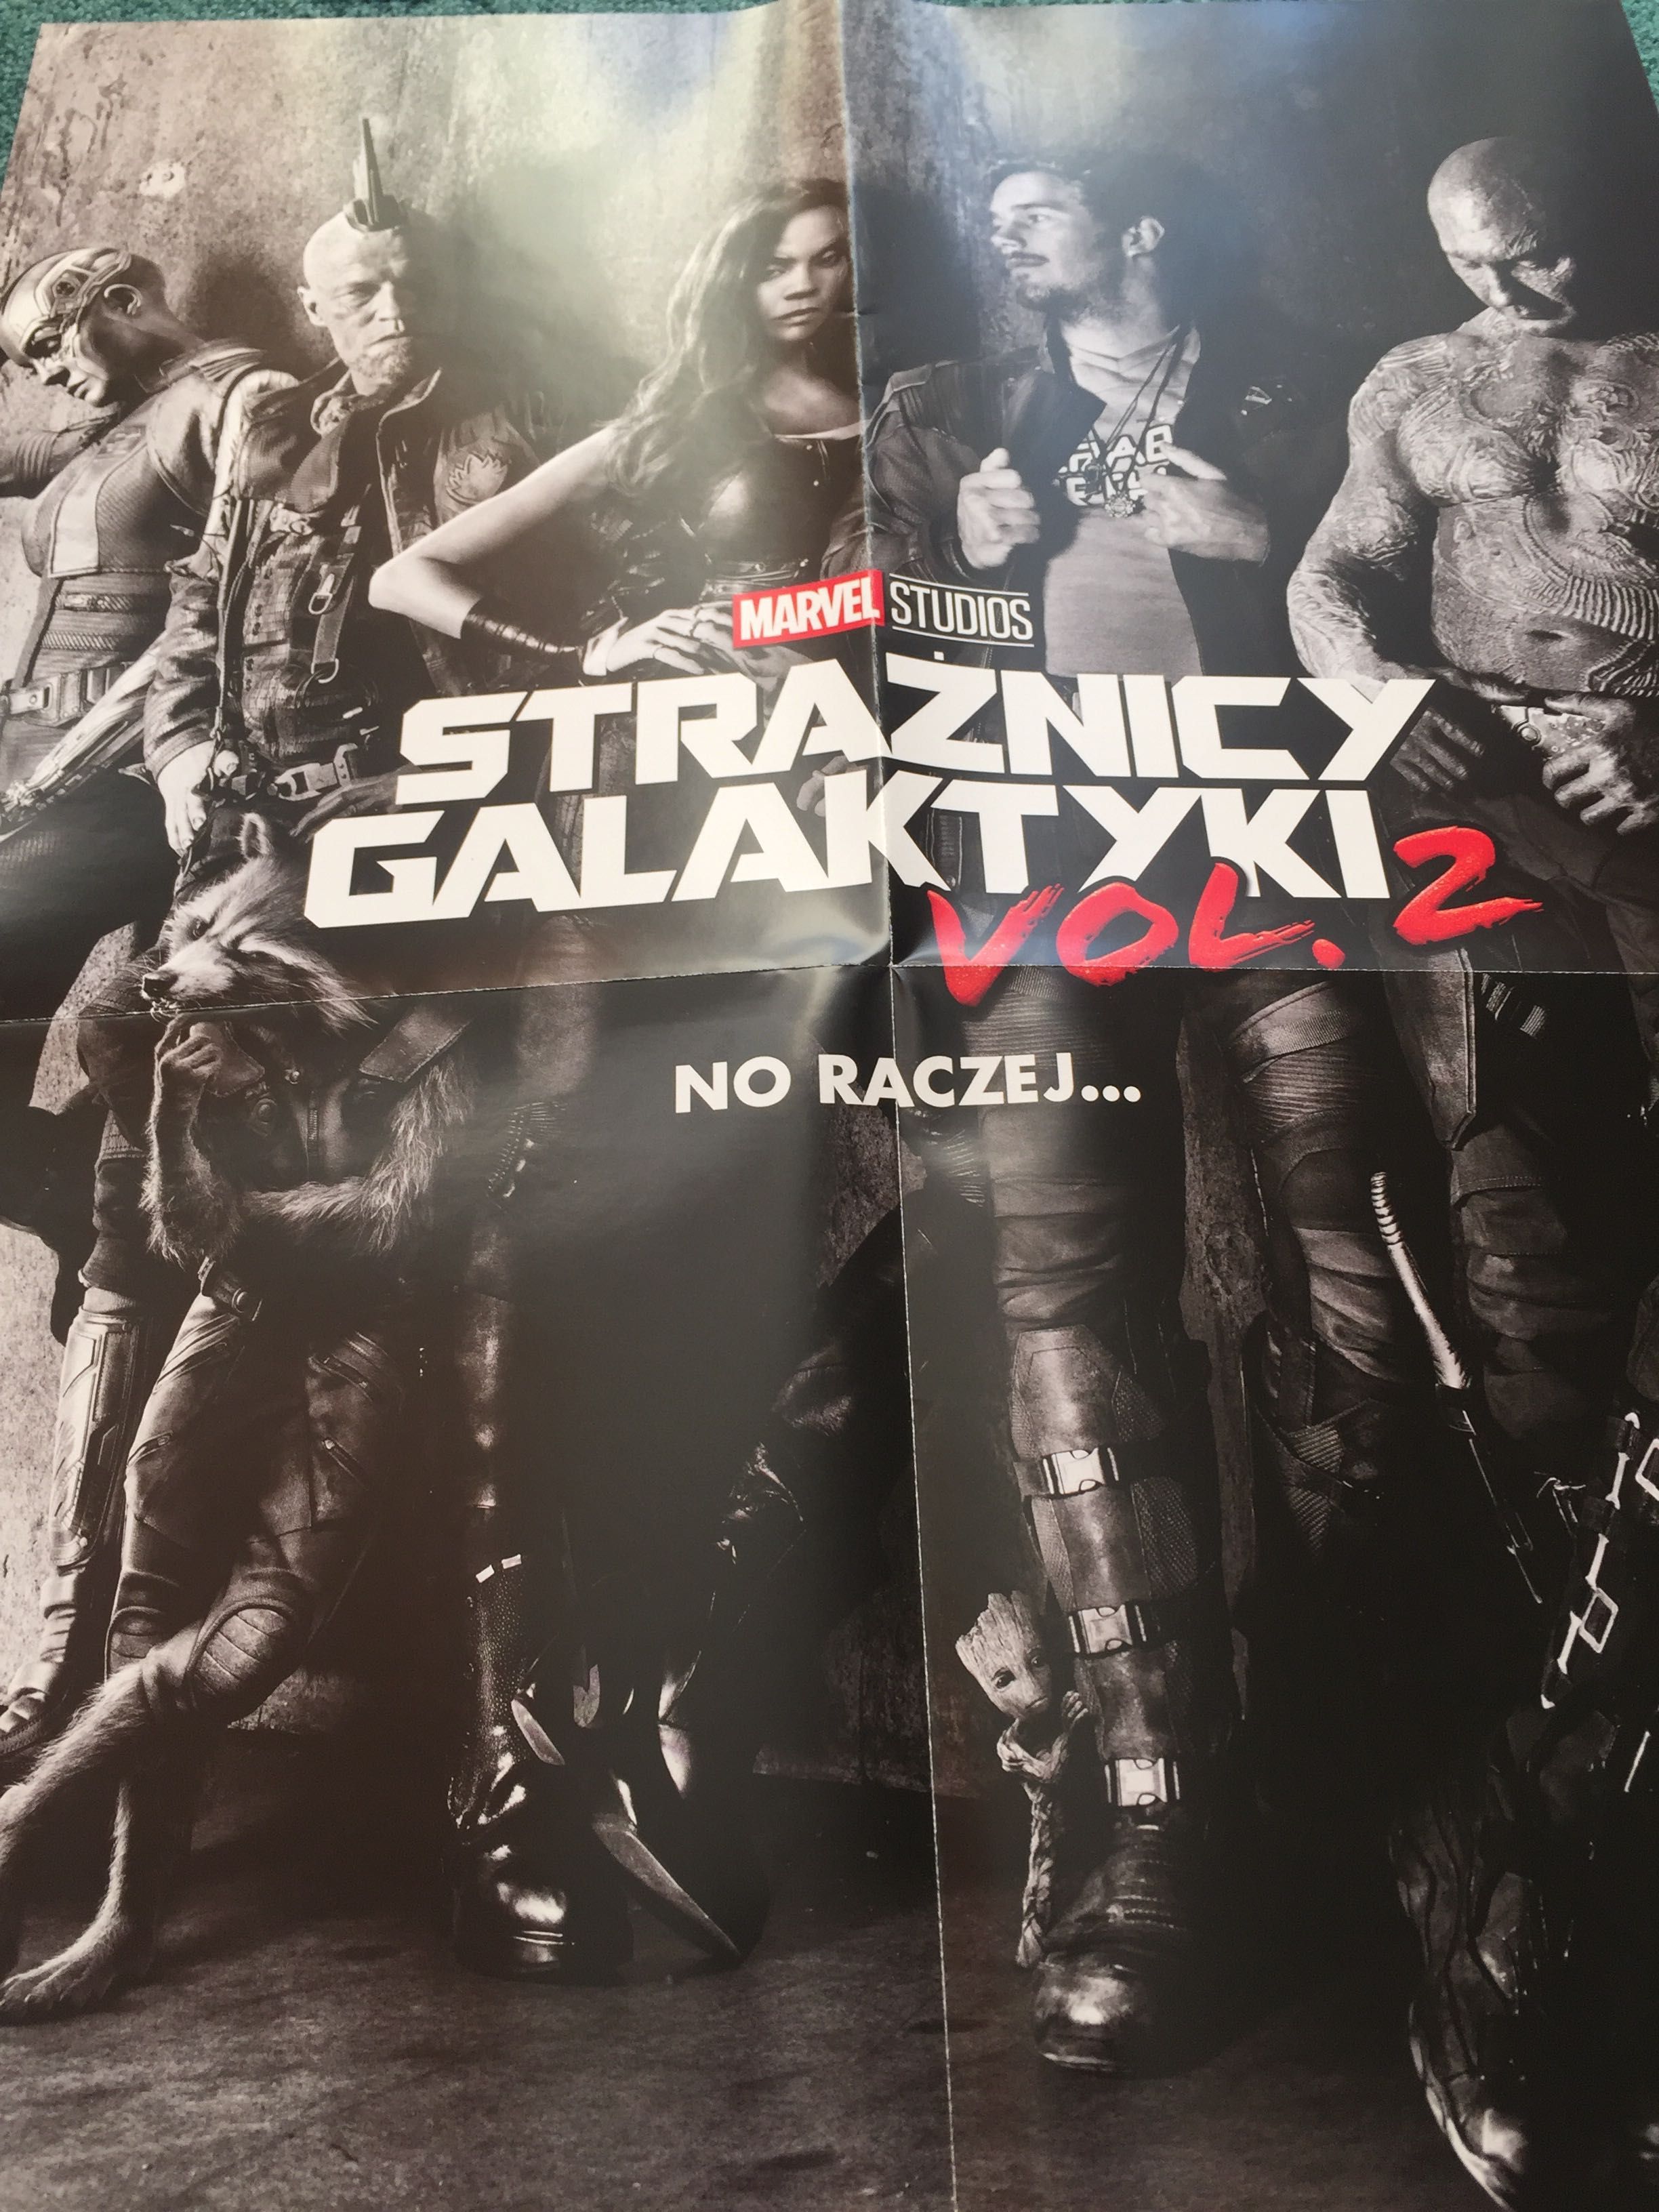 Plakat Strażnicy Galaktyki vol 2 Marvel studios jednostronny unikat